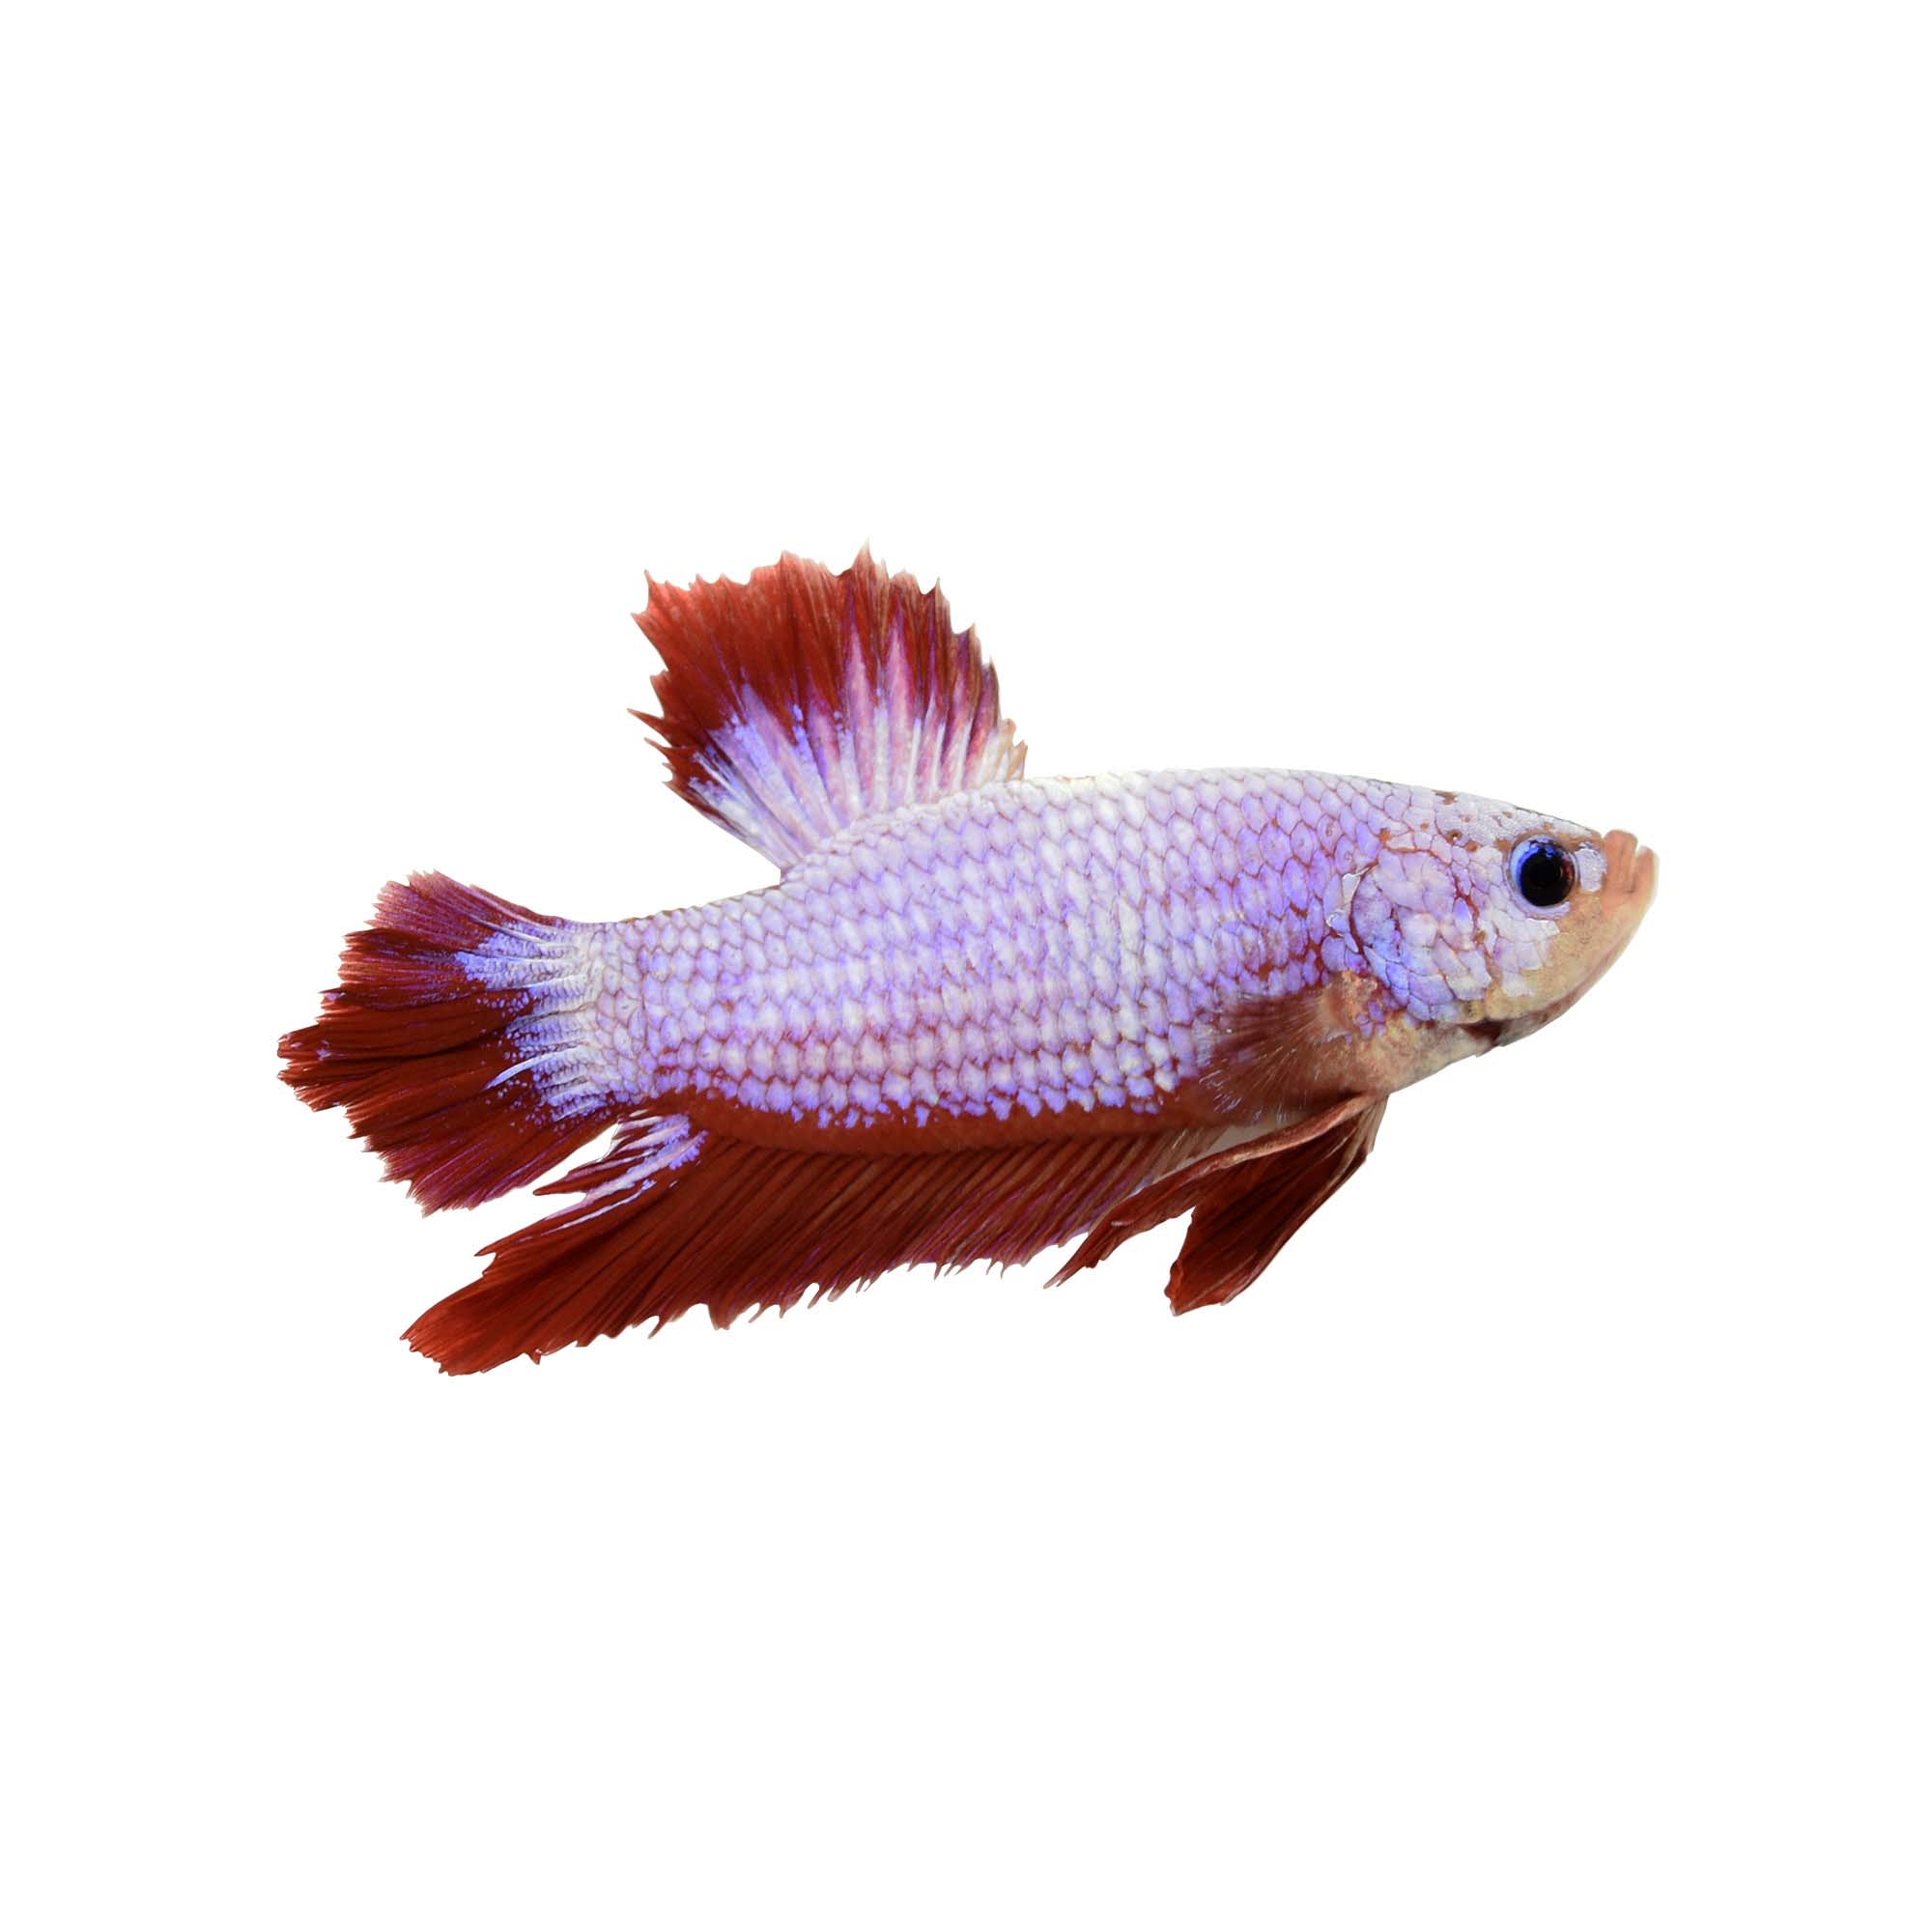 Vibrant and healthy Plakat Betta Fish swimming in an aquarium